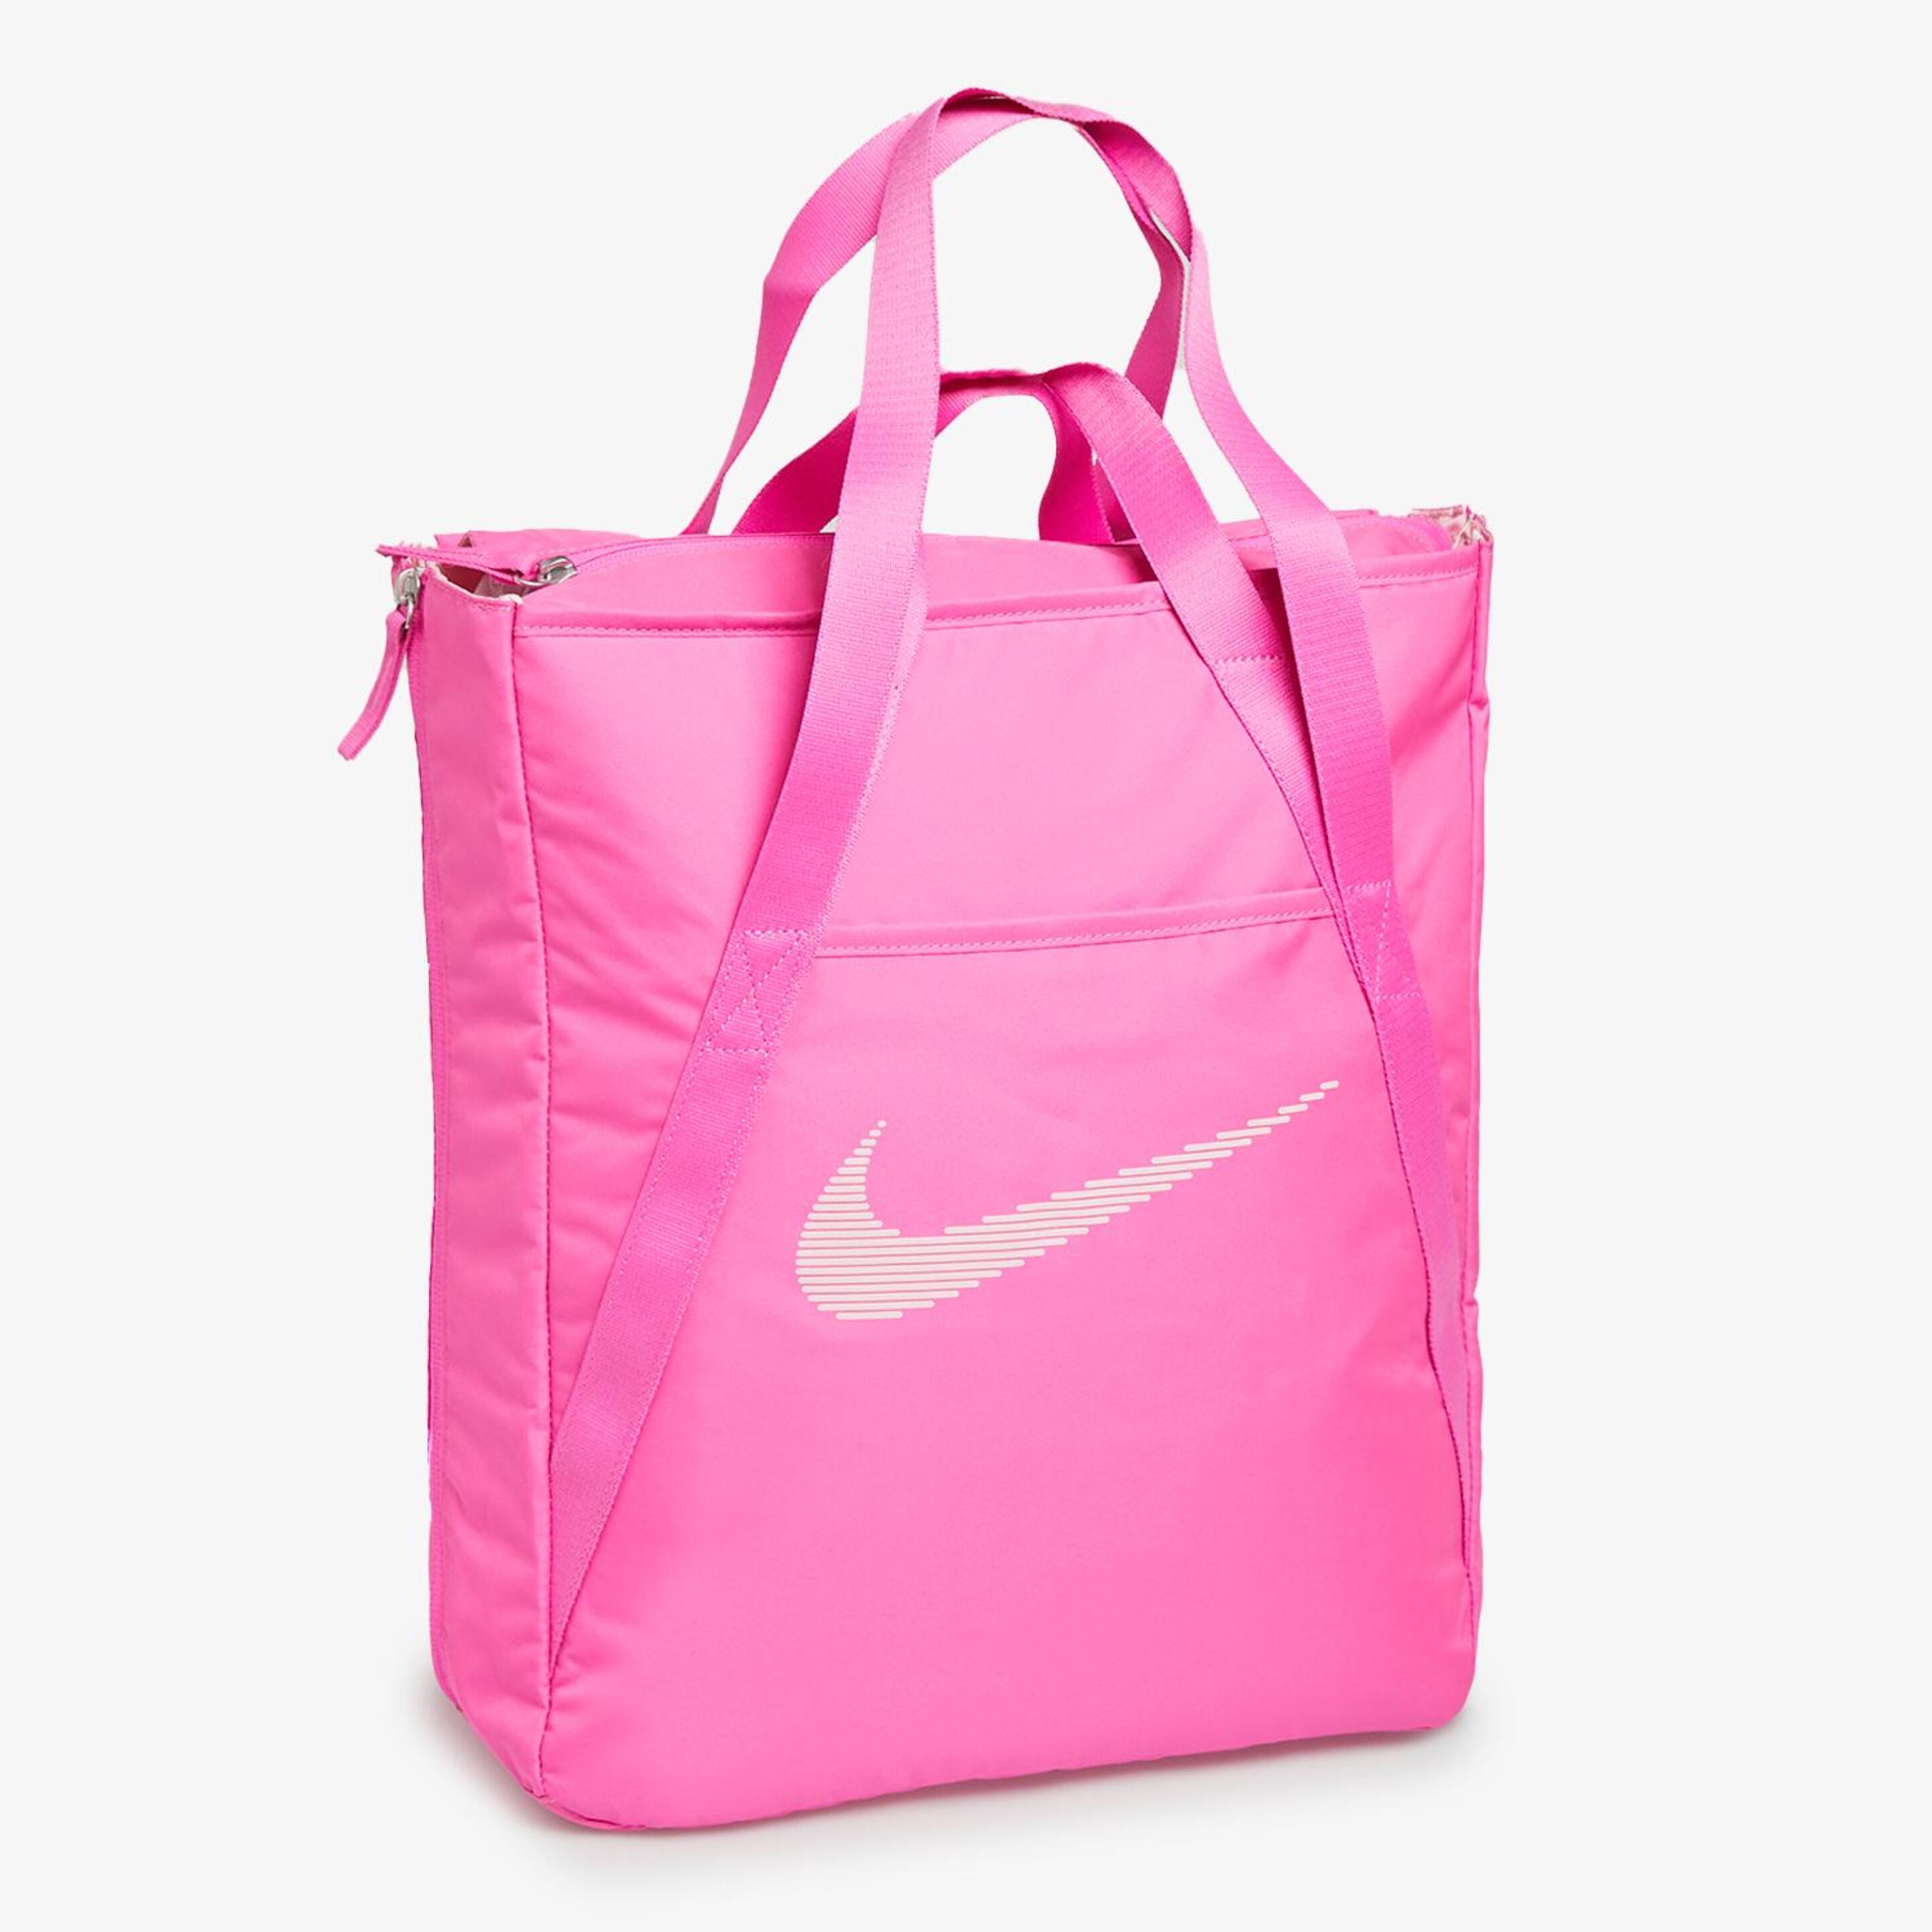 Bolso Nike - rosa - Bolso Tote 28 L